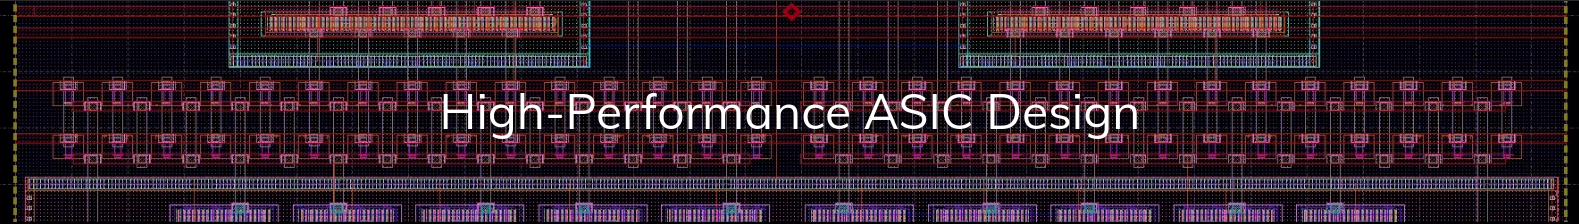 High Performance ASIC Design Banner